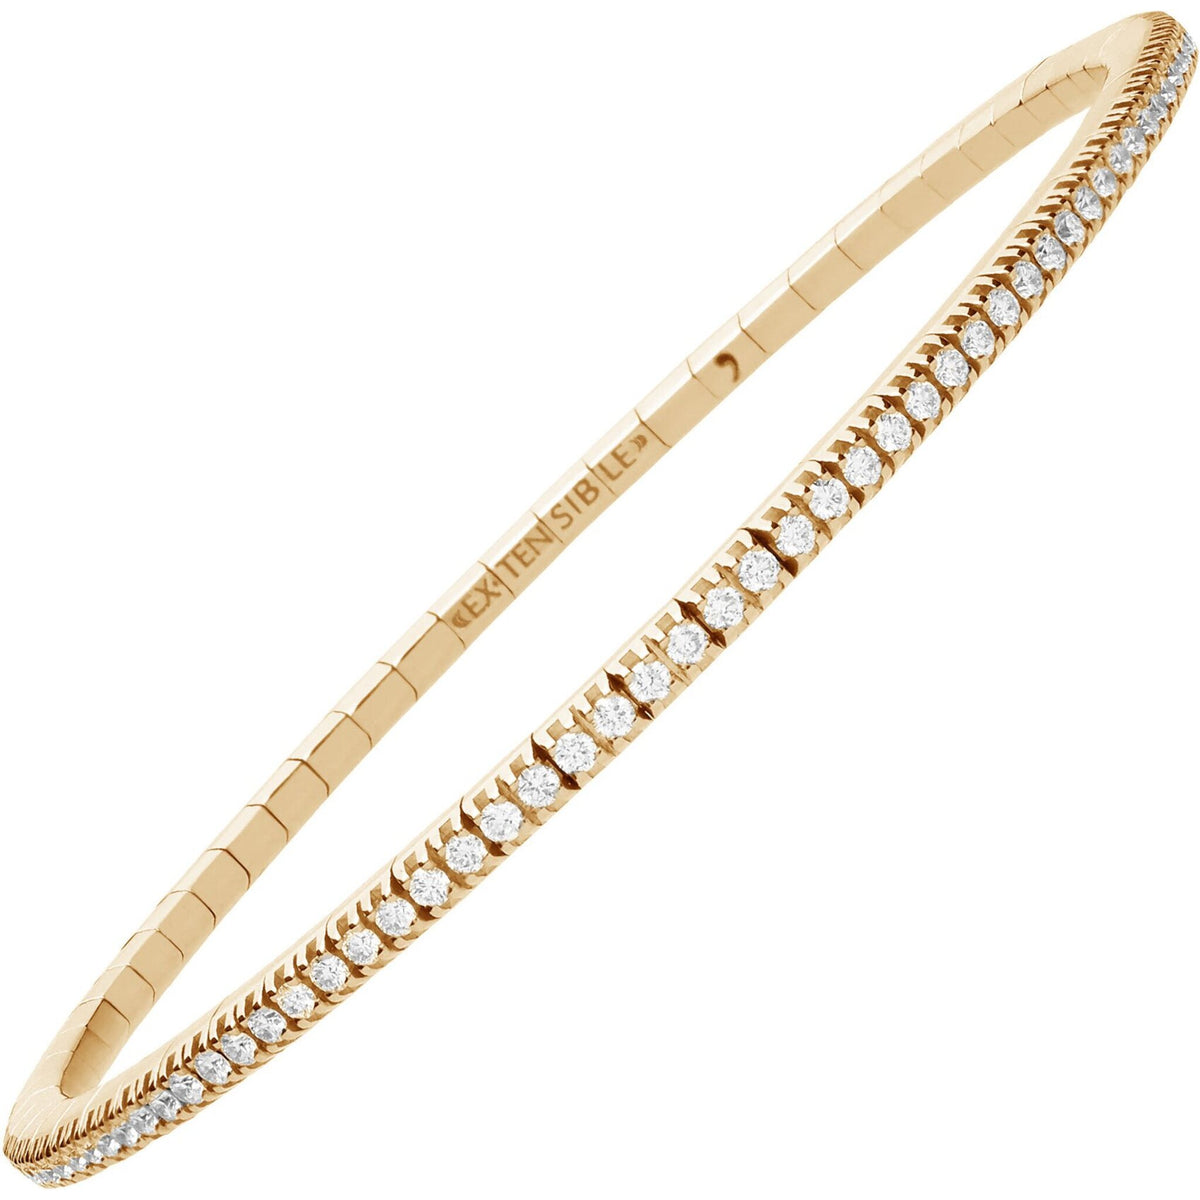 Extensible - Men's 1 Carat White Diamond Stretch Tennis Bracelet - 18K Yellow Gold